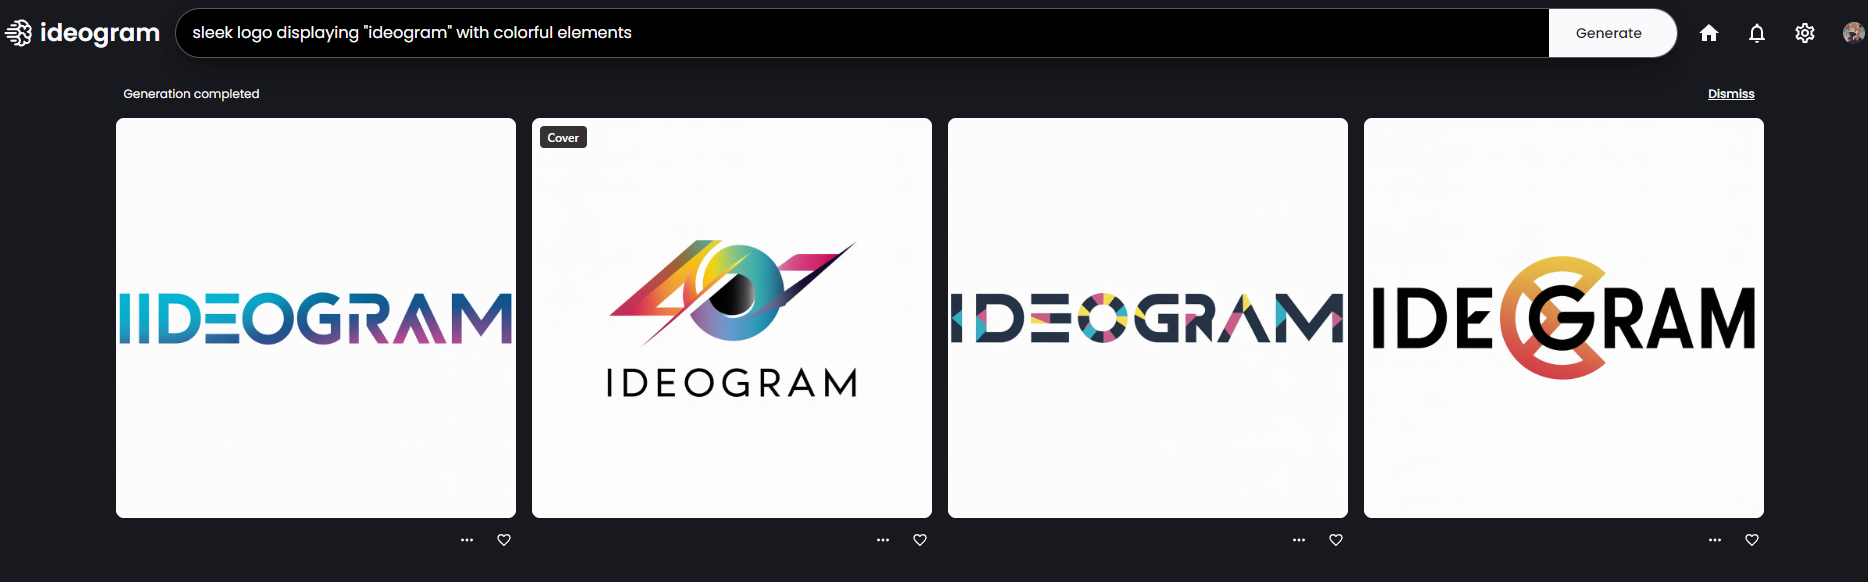 Ideogram Logo Prompt